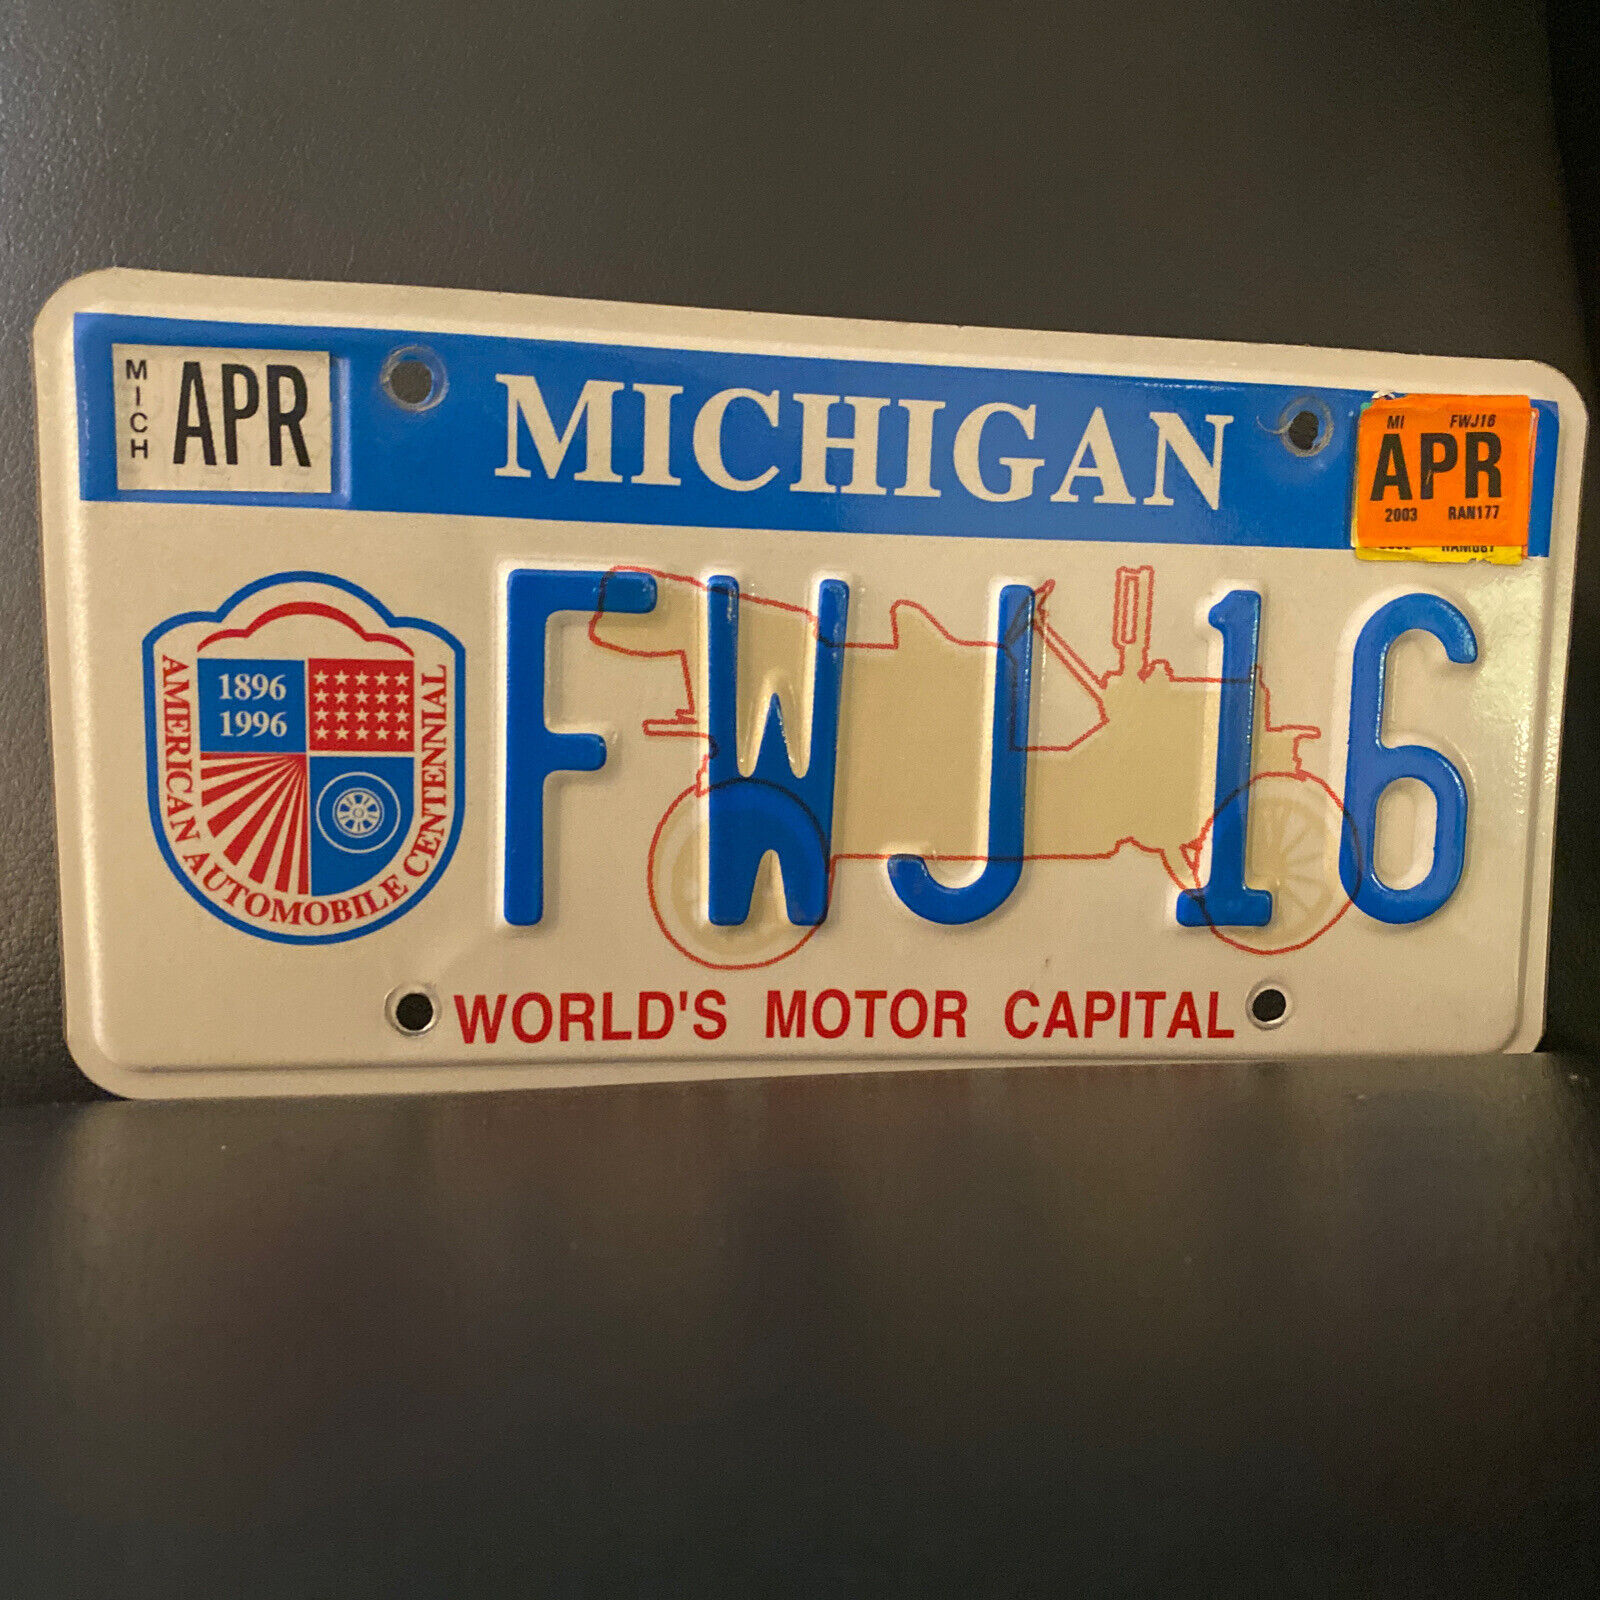 April 2003 Michigan License Plate World’s Motor Capital